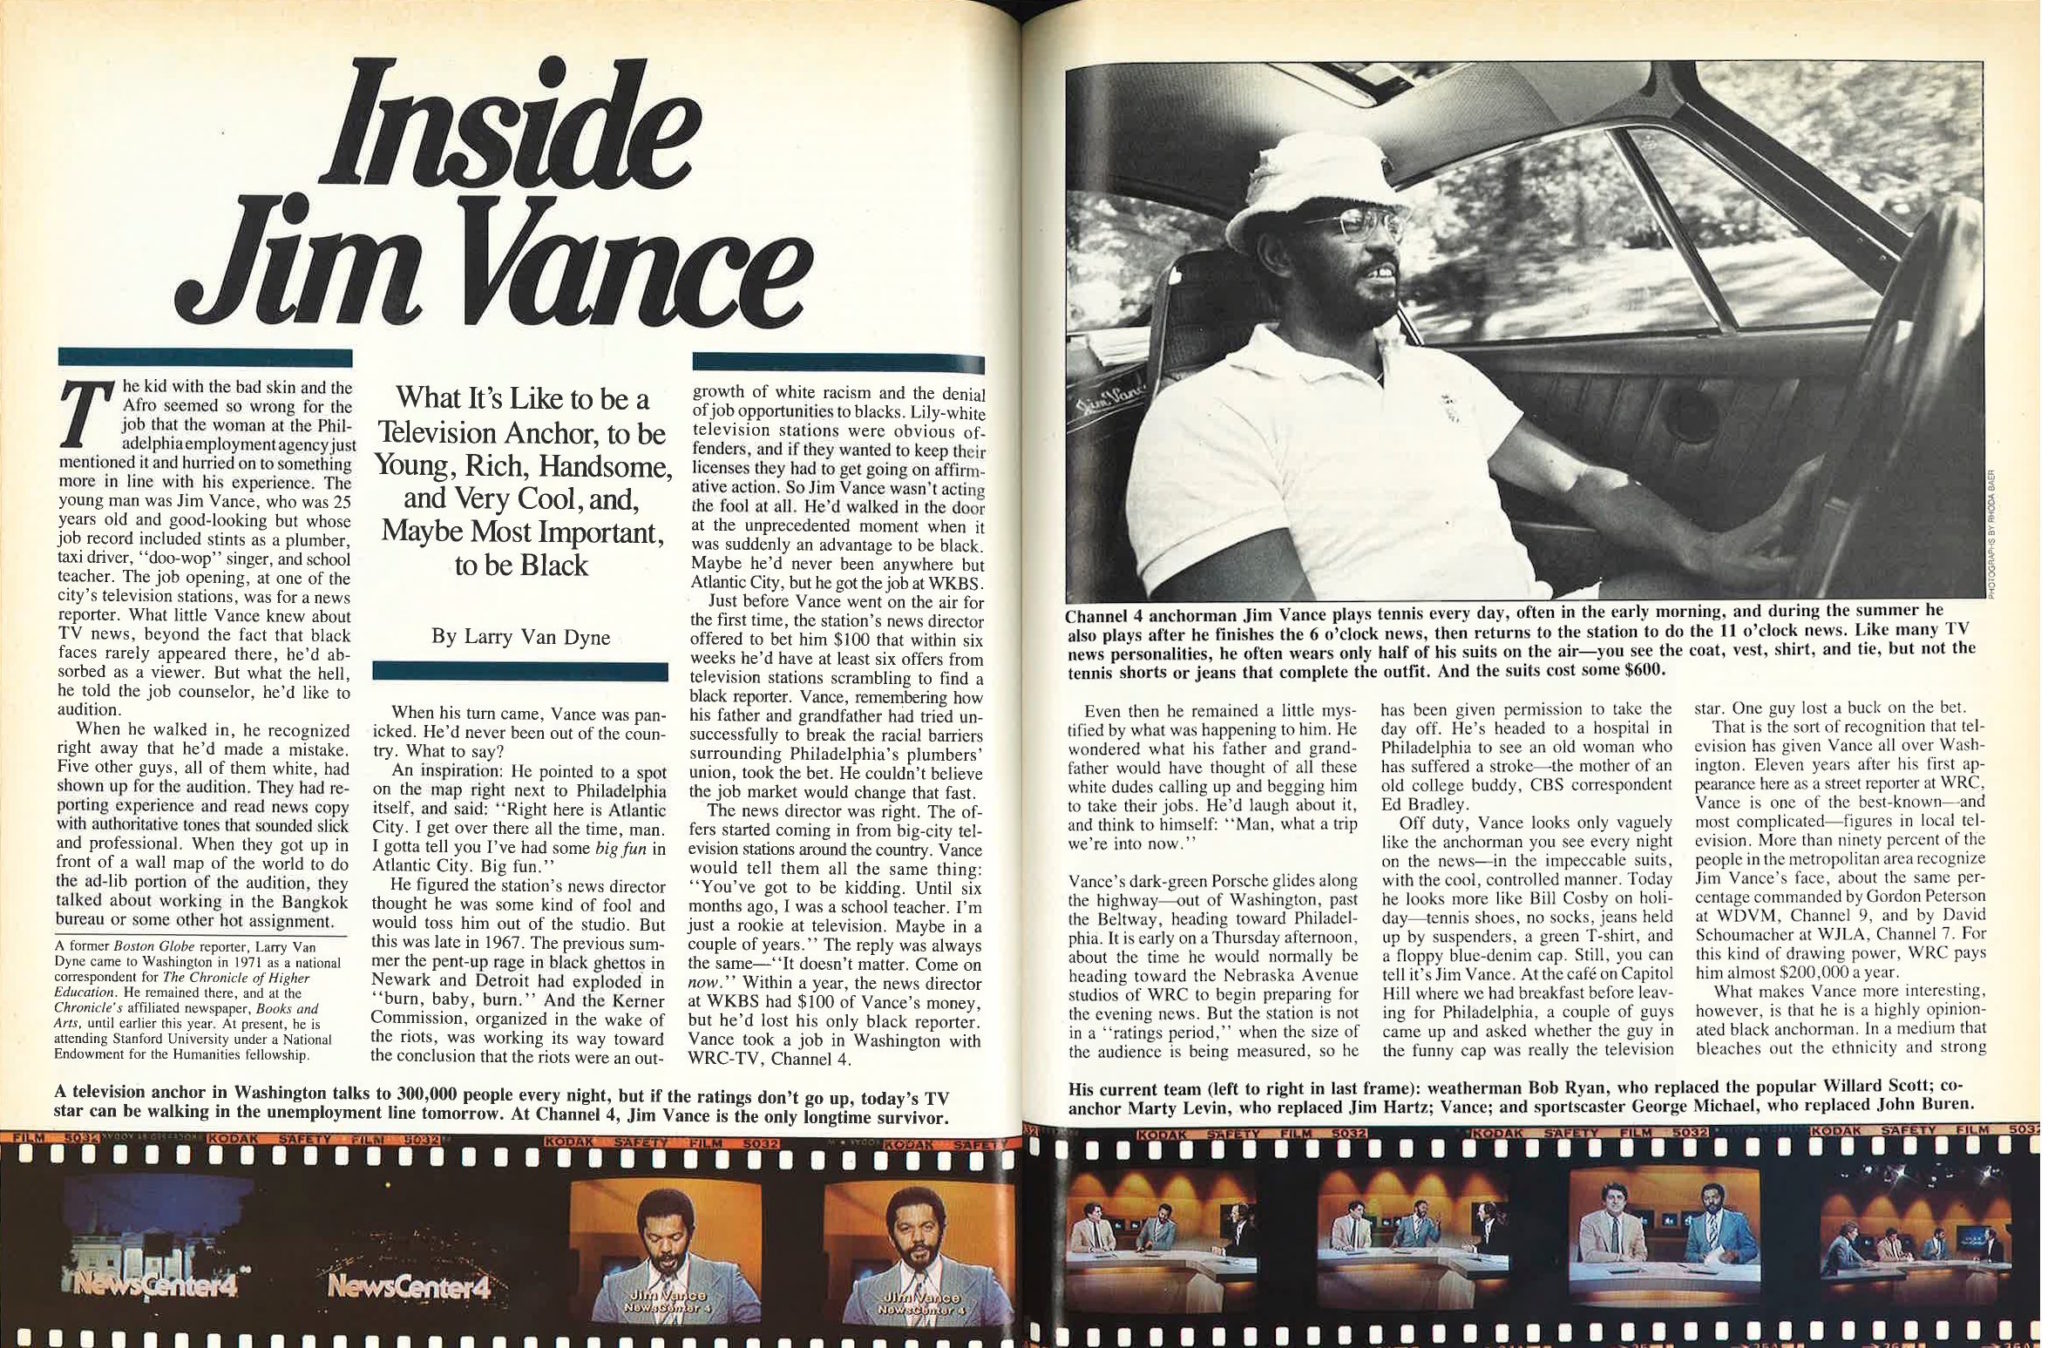 Jim Vance Washingtonian magazine 1980